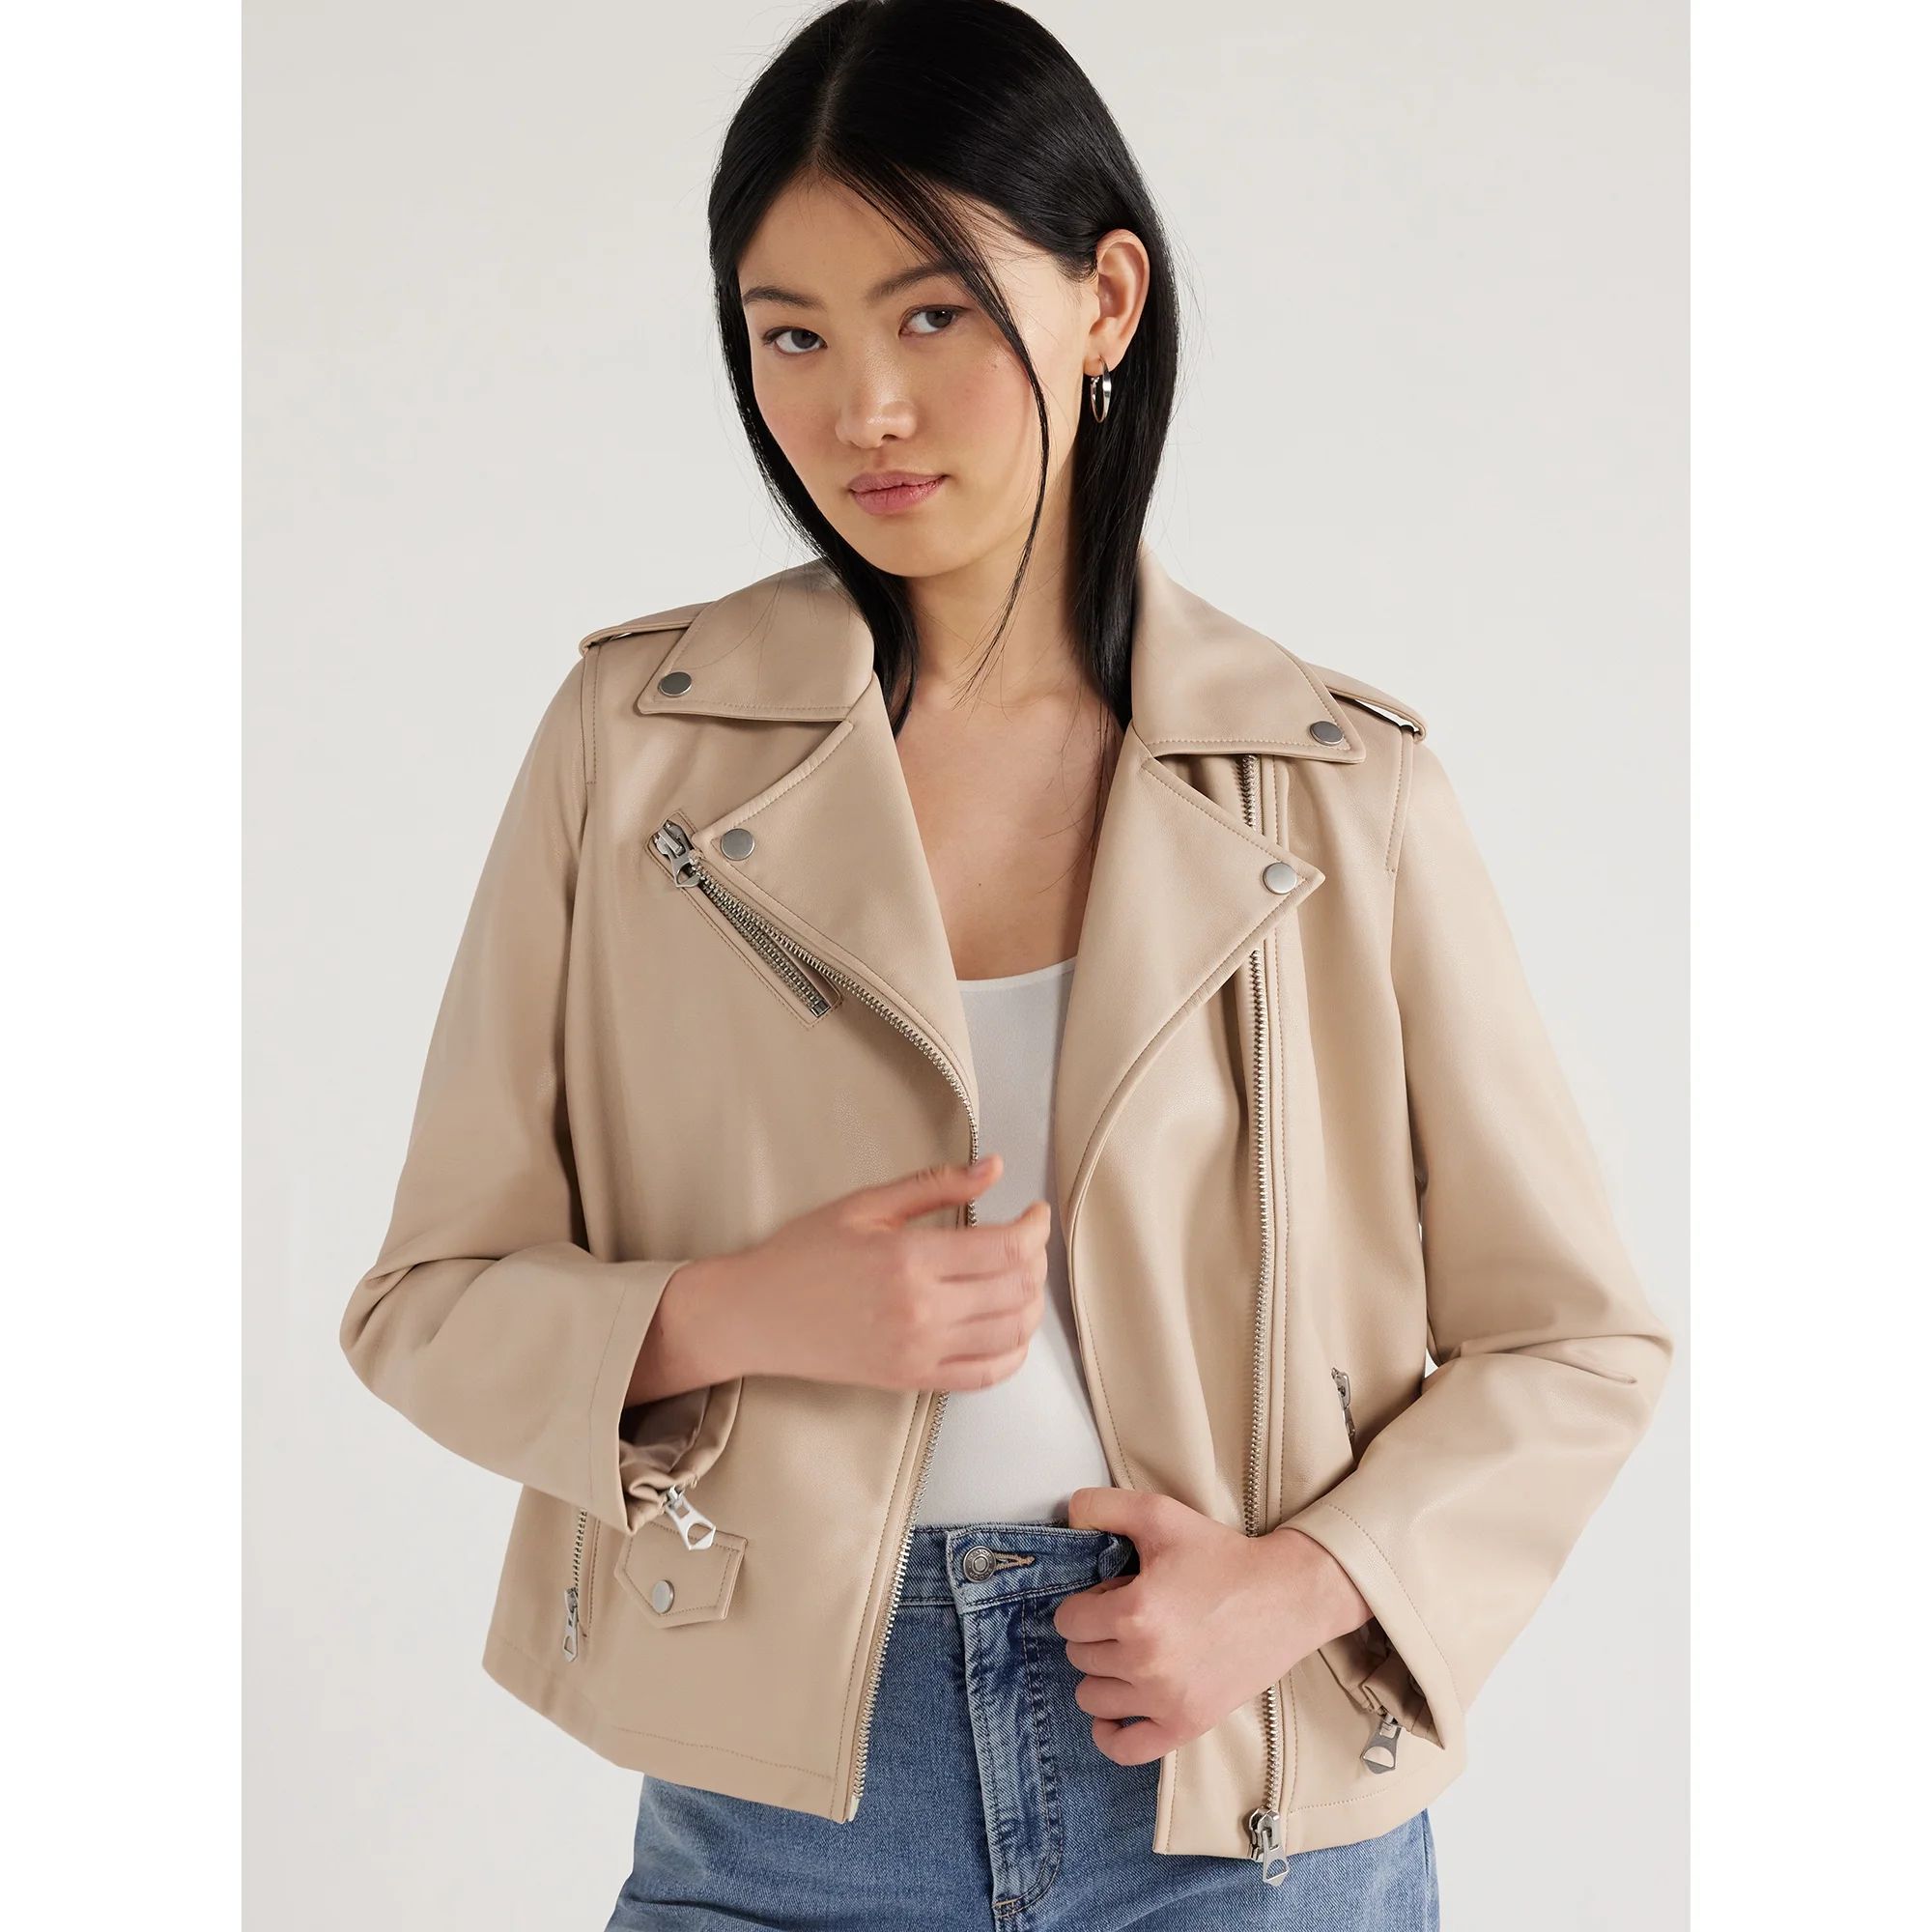 Scoop Women's Faux Leather Asymmetrical Zip Moto Jacket, Sizes XS-XXL | Walmart (US)